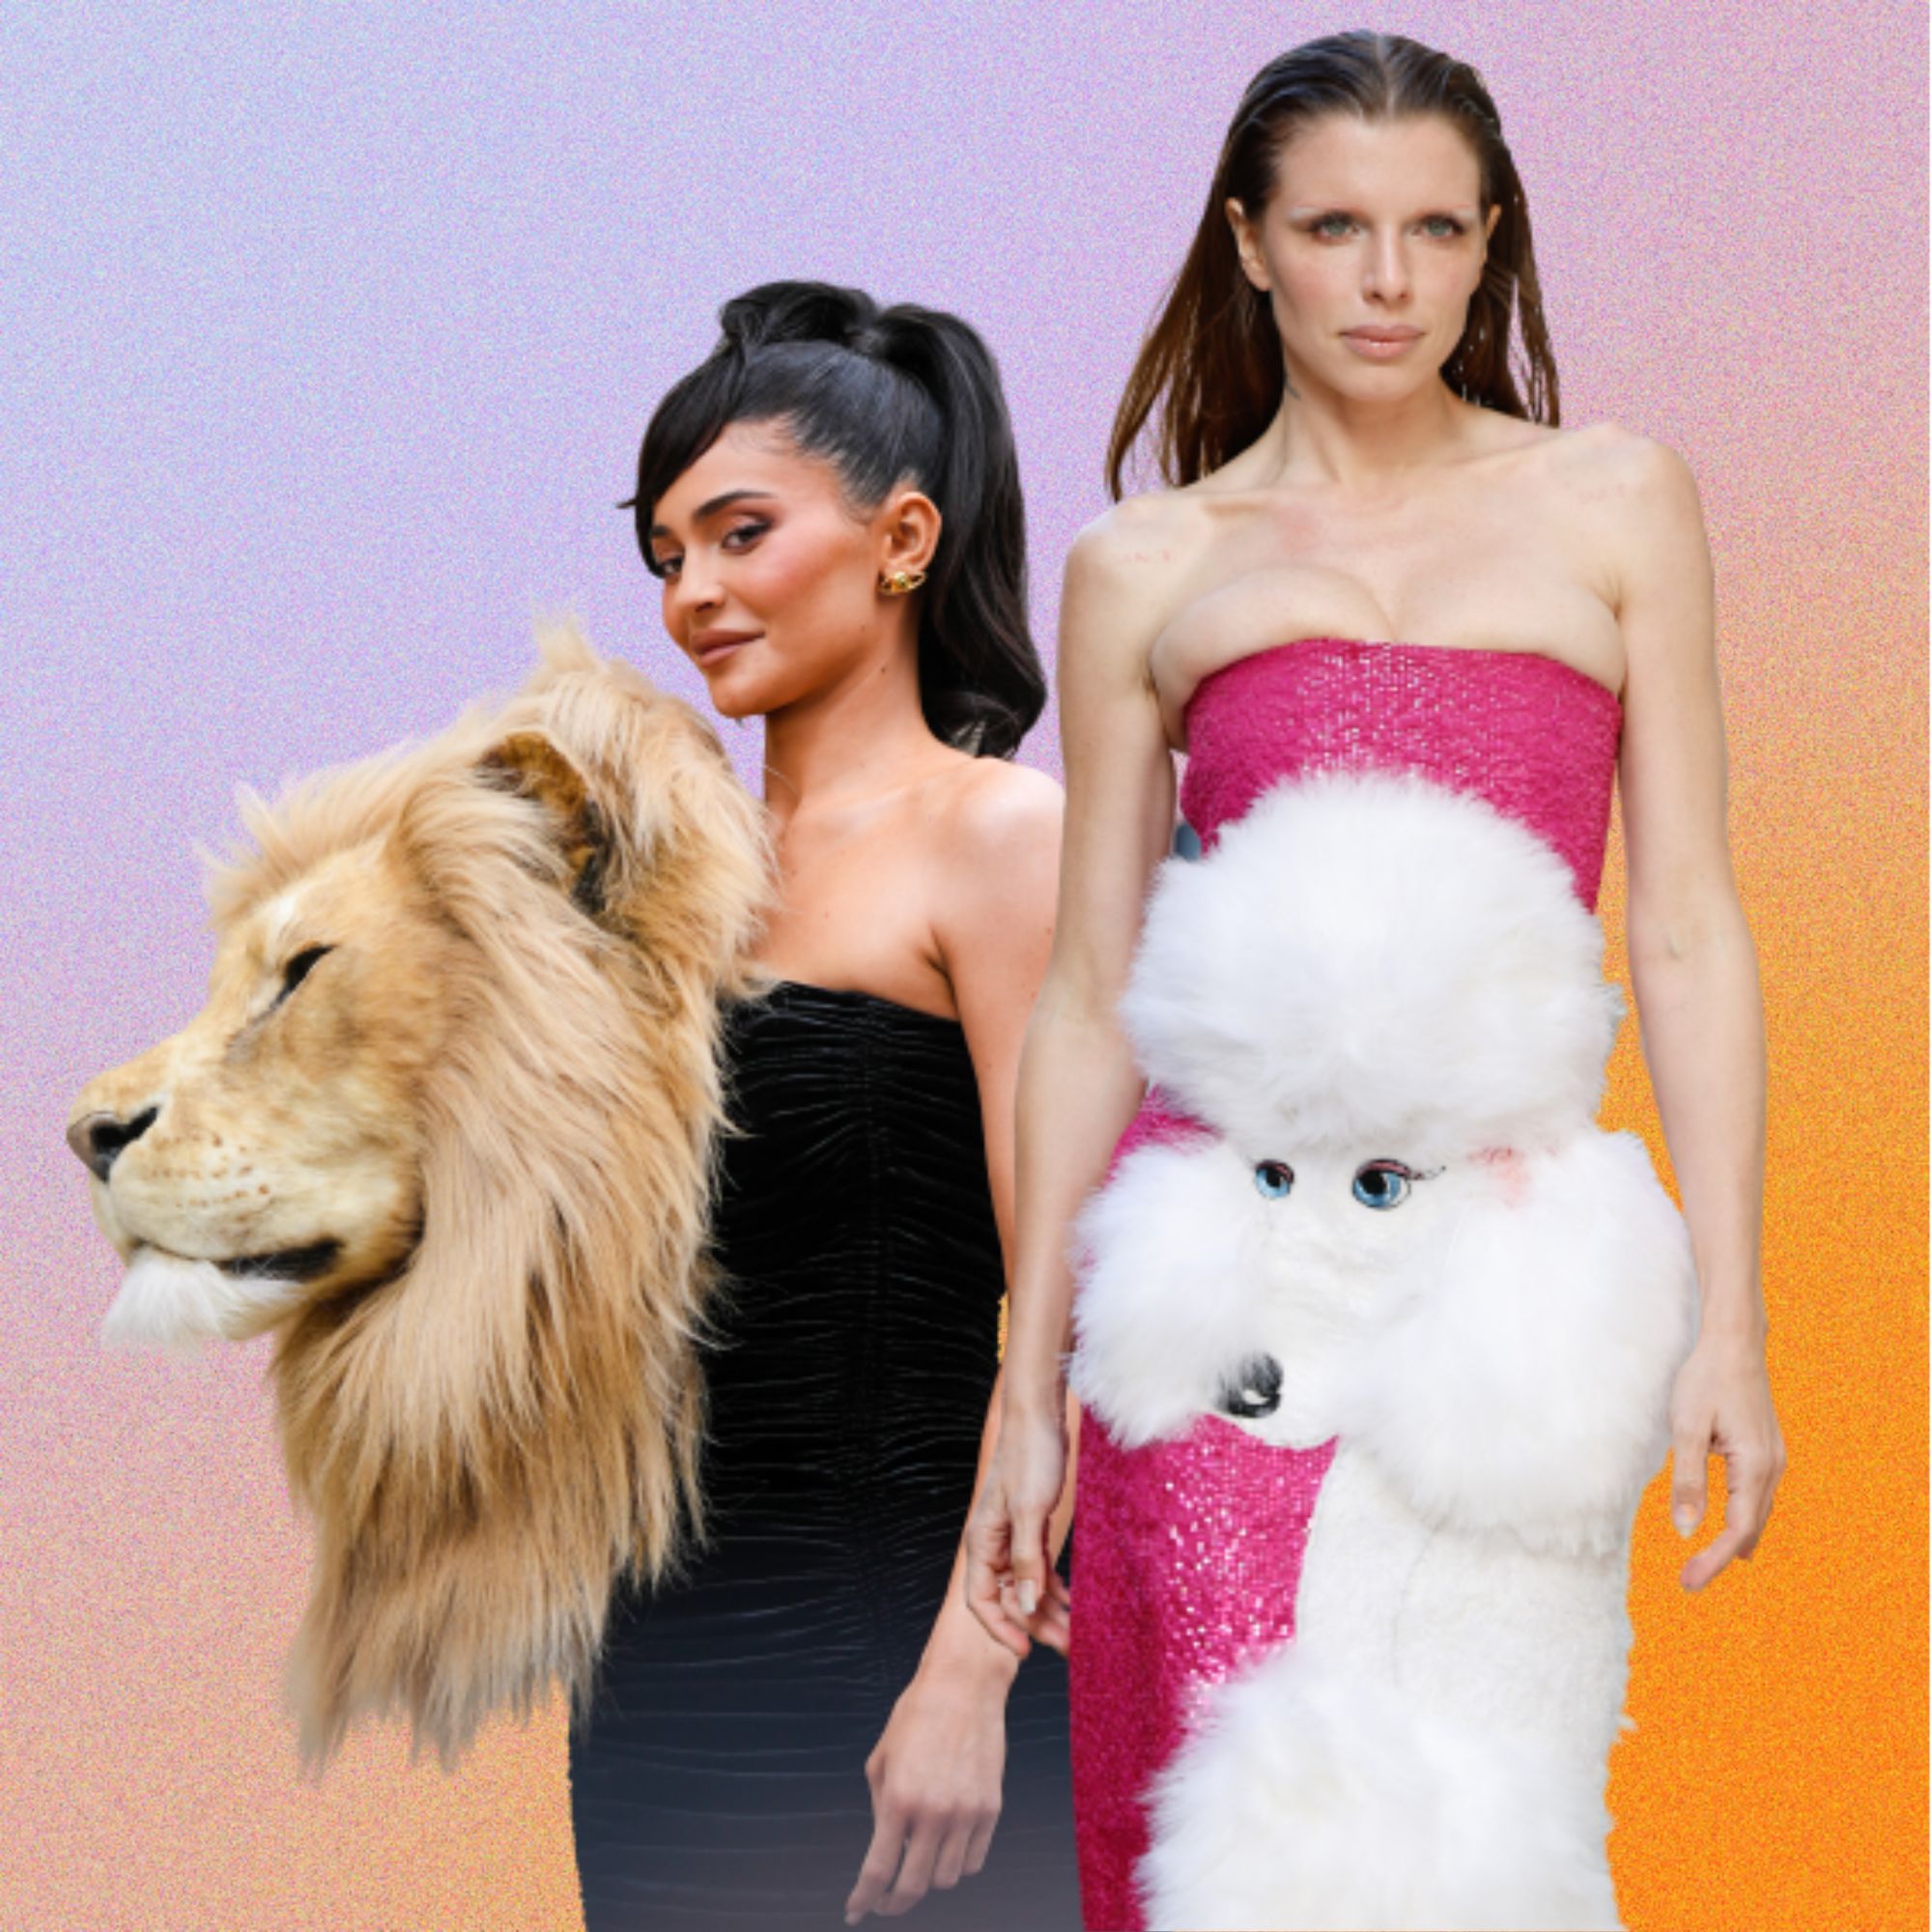 Fake Animal Heads Stir Outrage at Paris Haute Couture Fashion Week